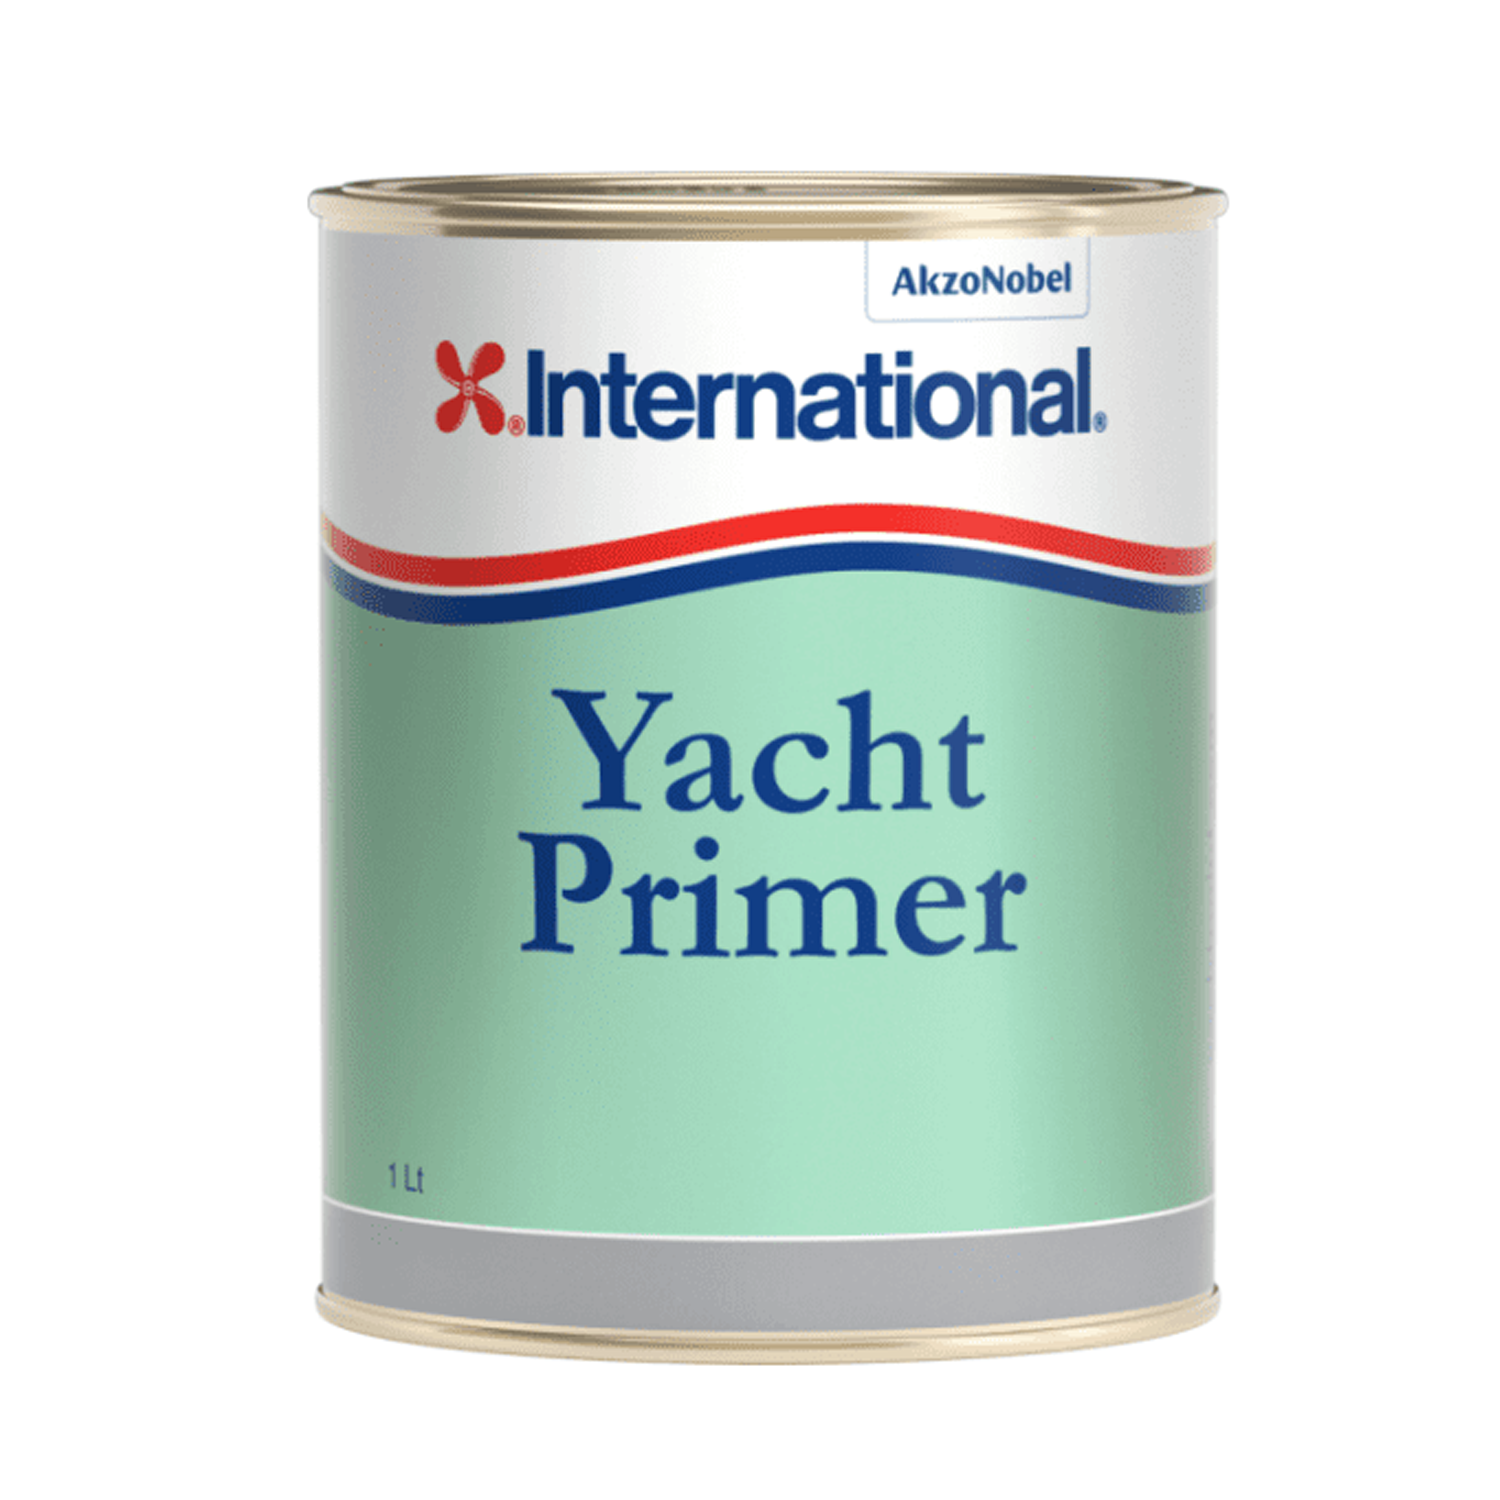 Yacht Primer